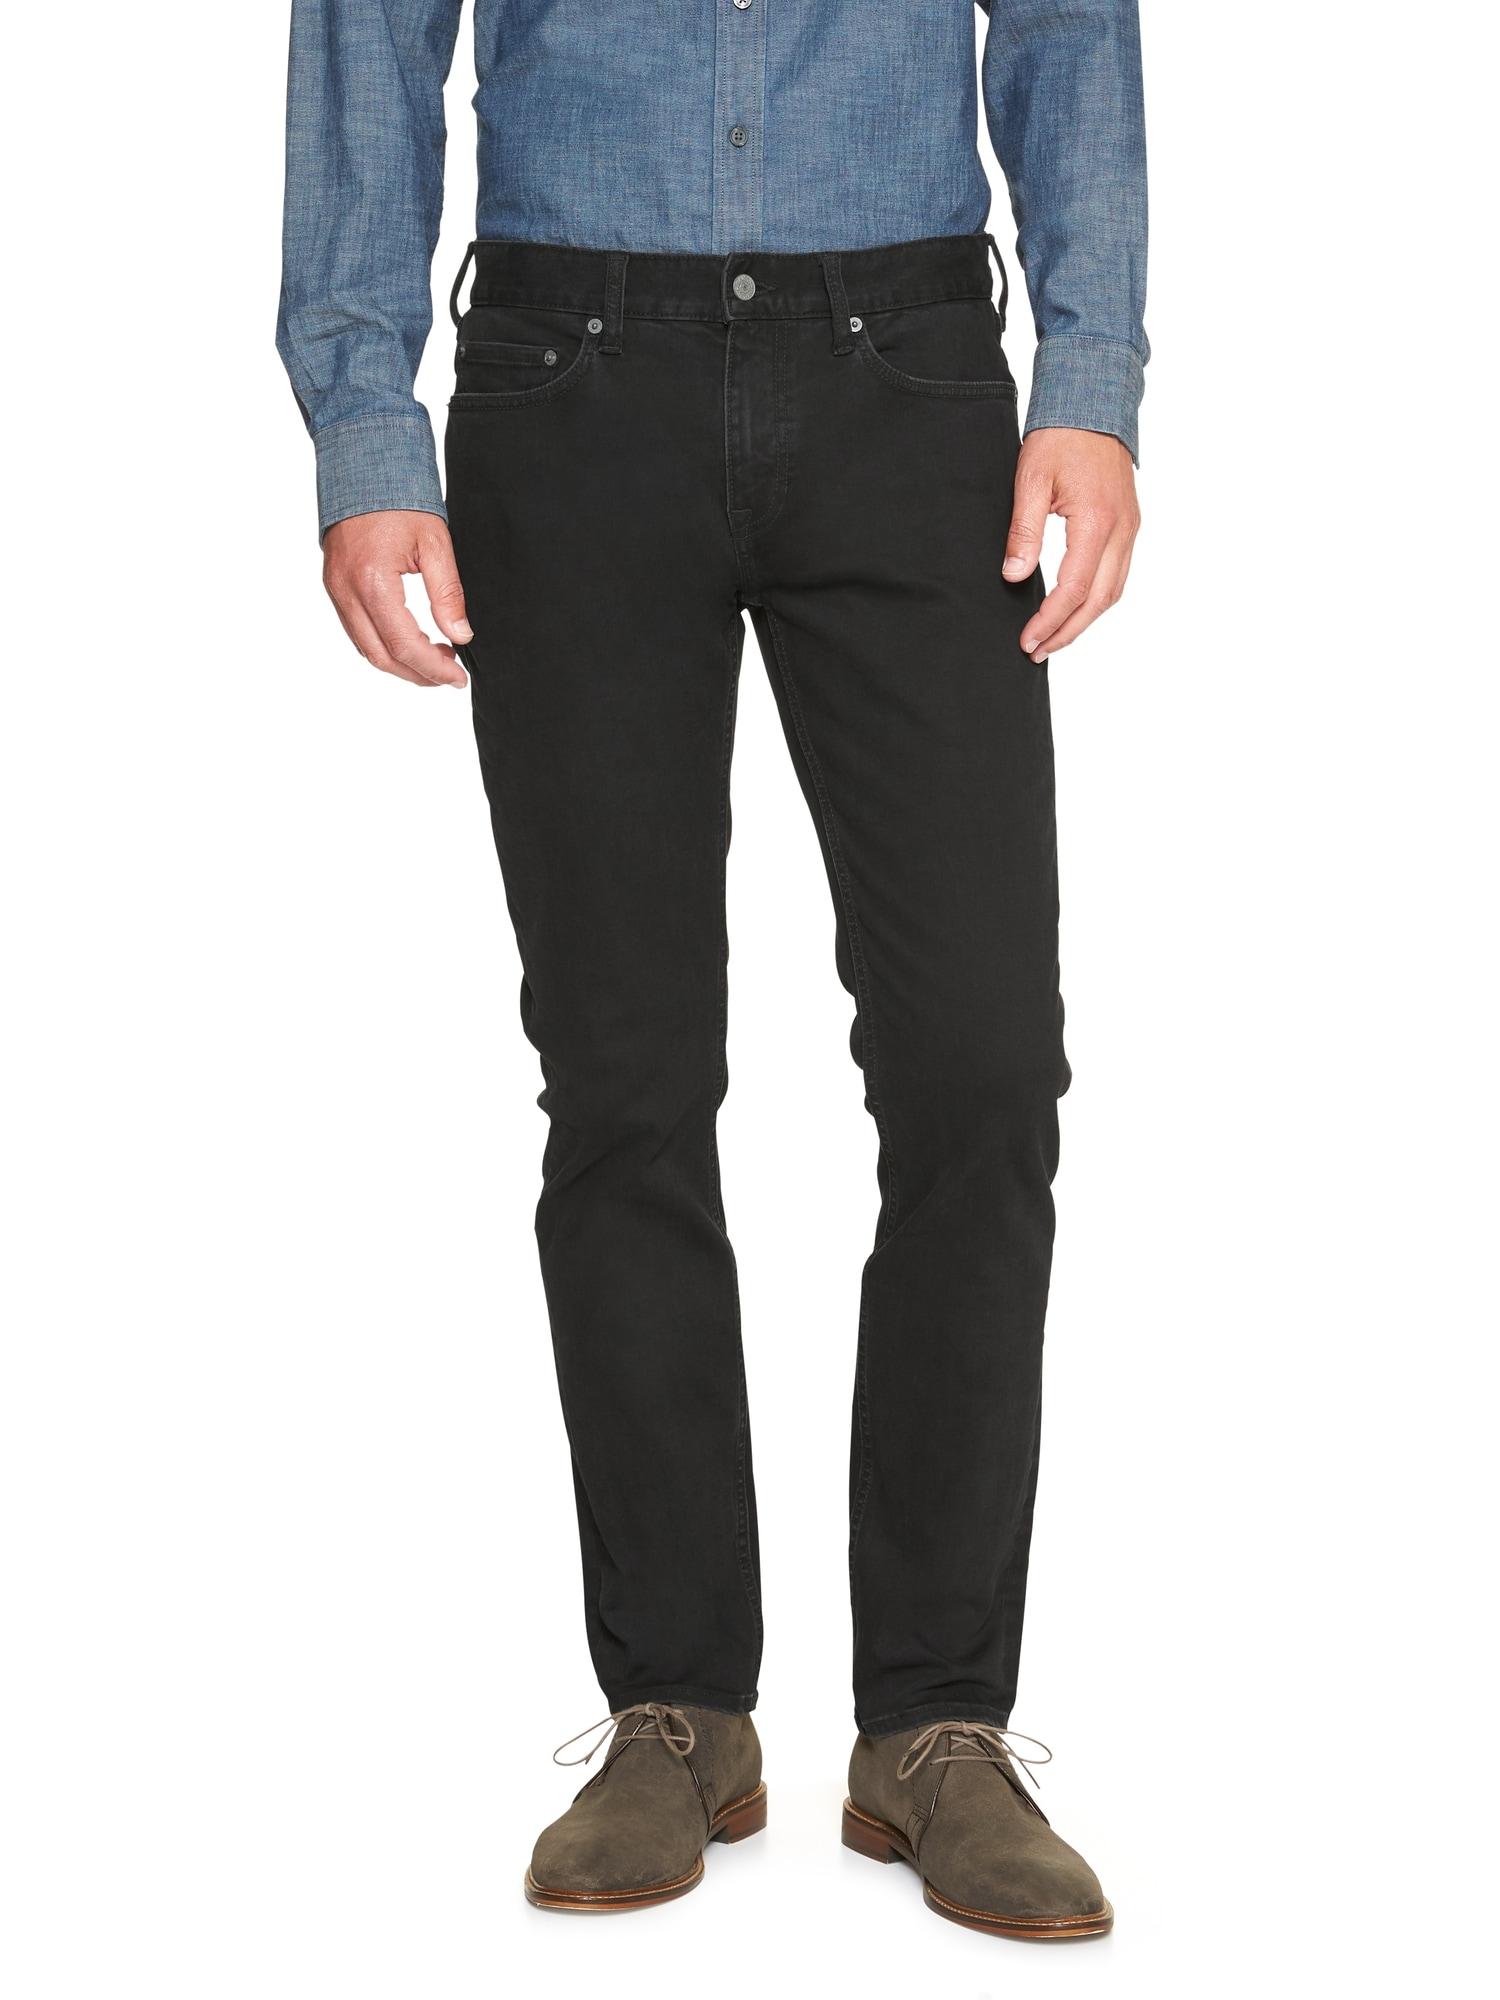 Banana Republic Black Jeans - fasteningspecialists.com